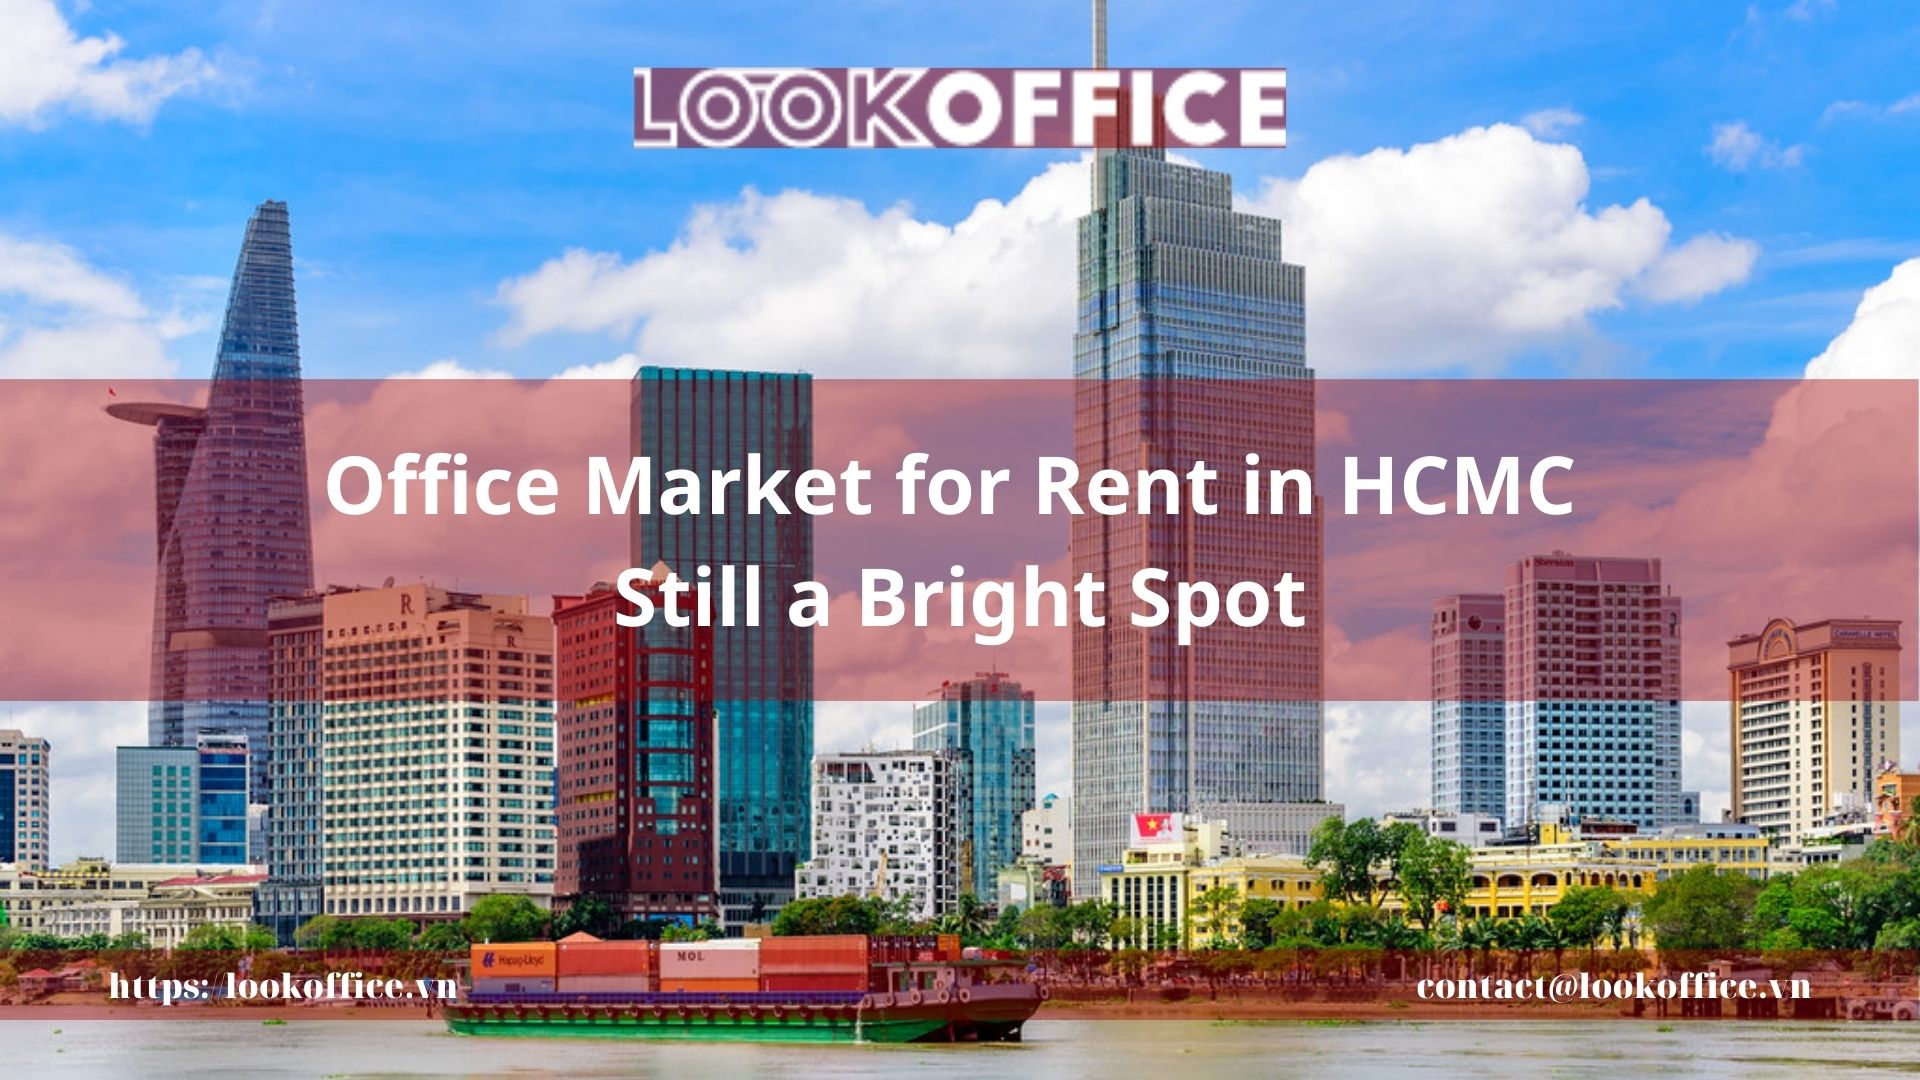 Office Market for Rent in HCMC Still a Bright Spot